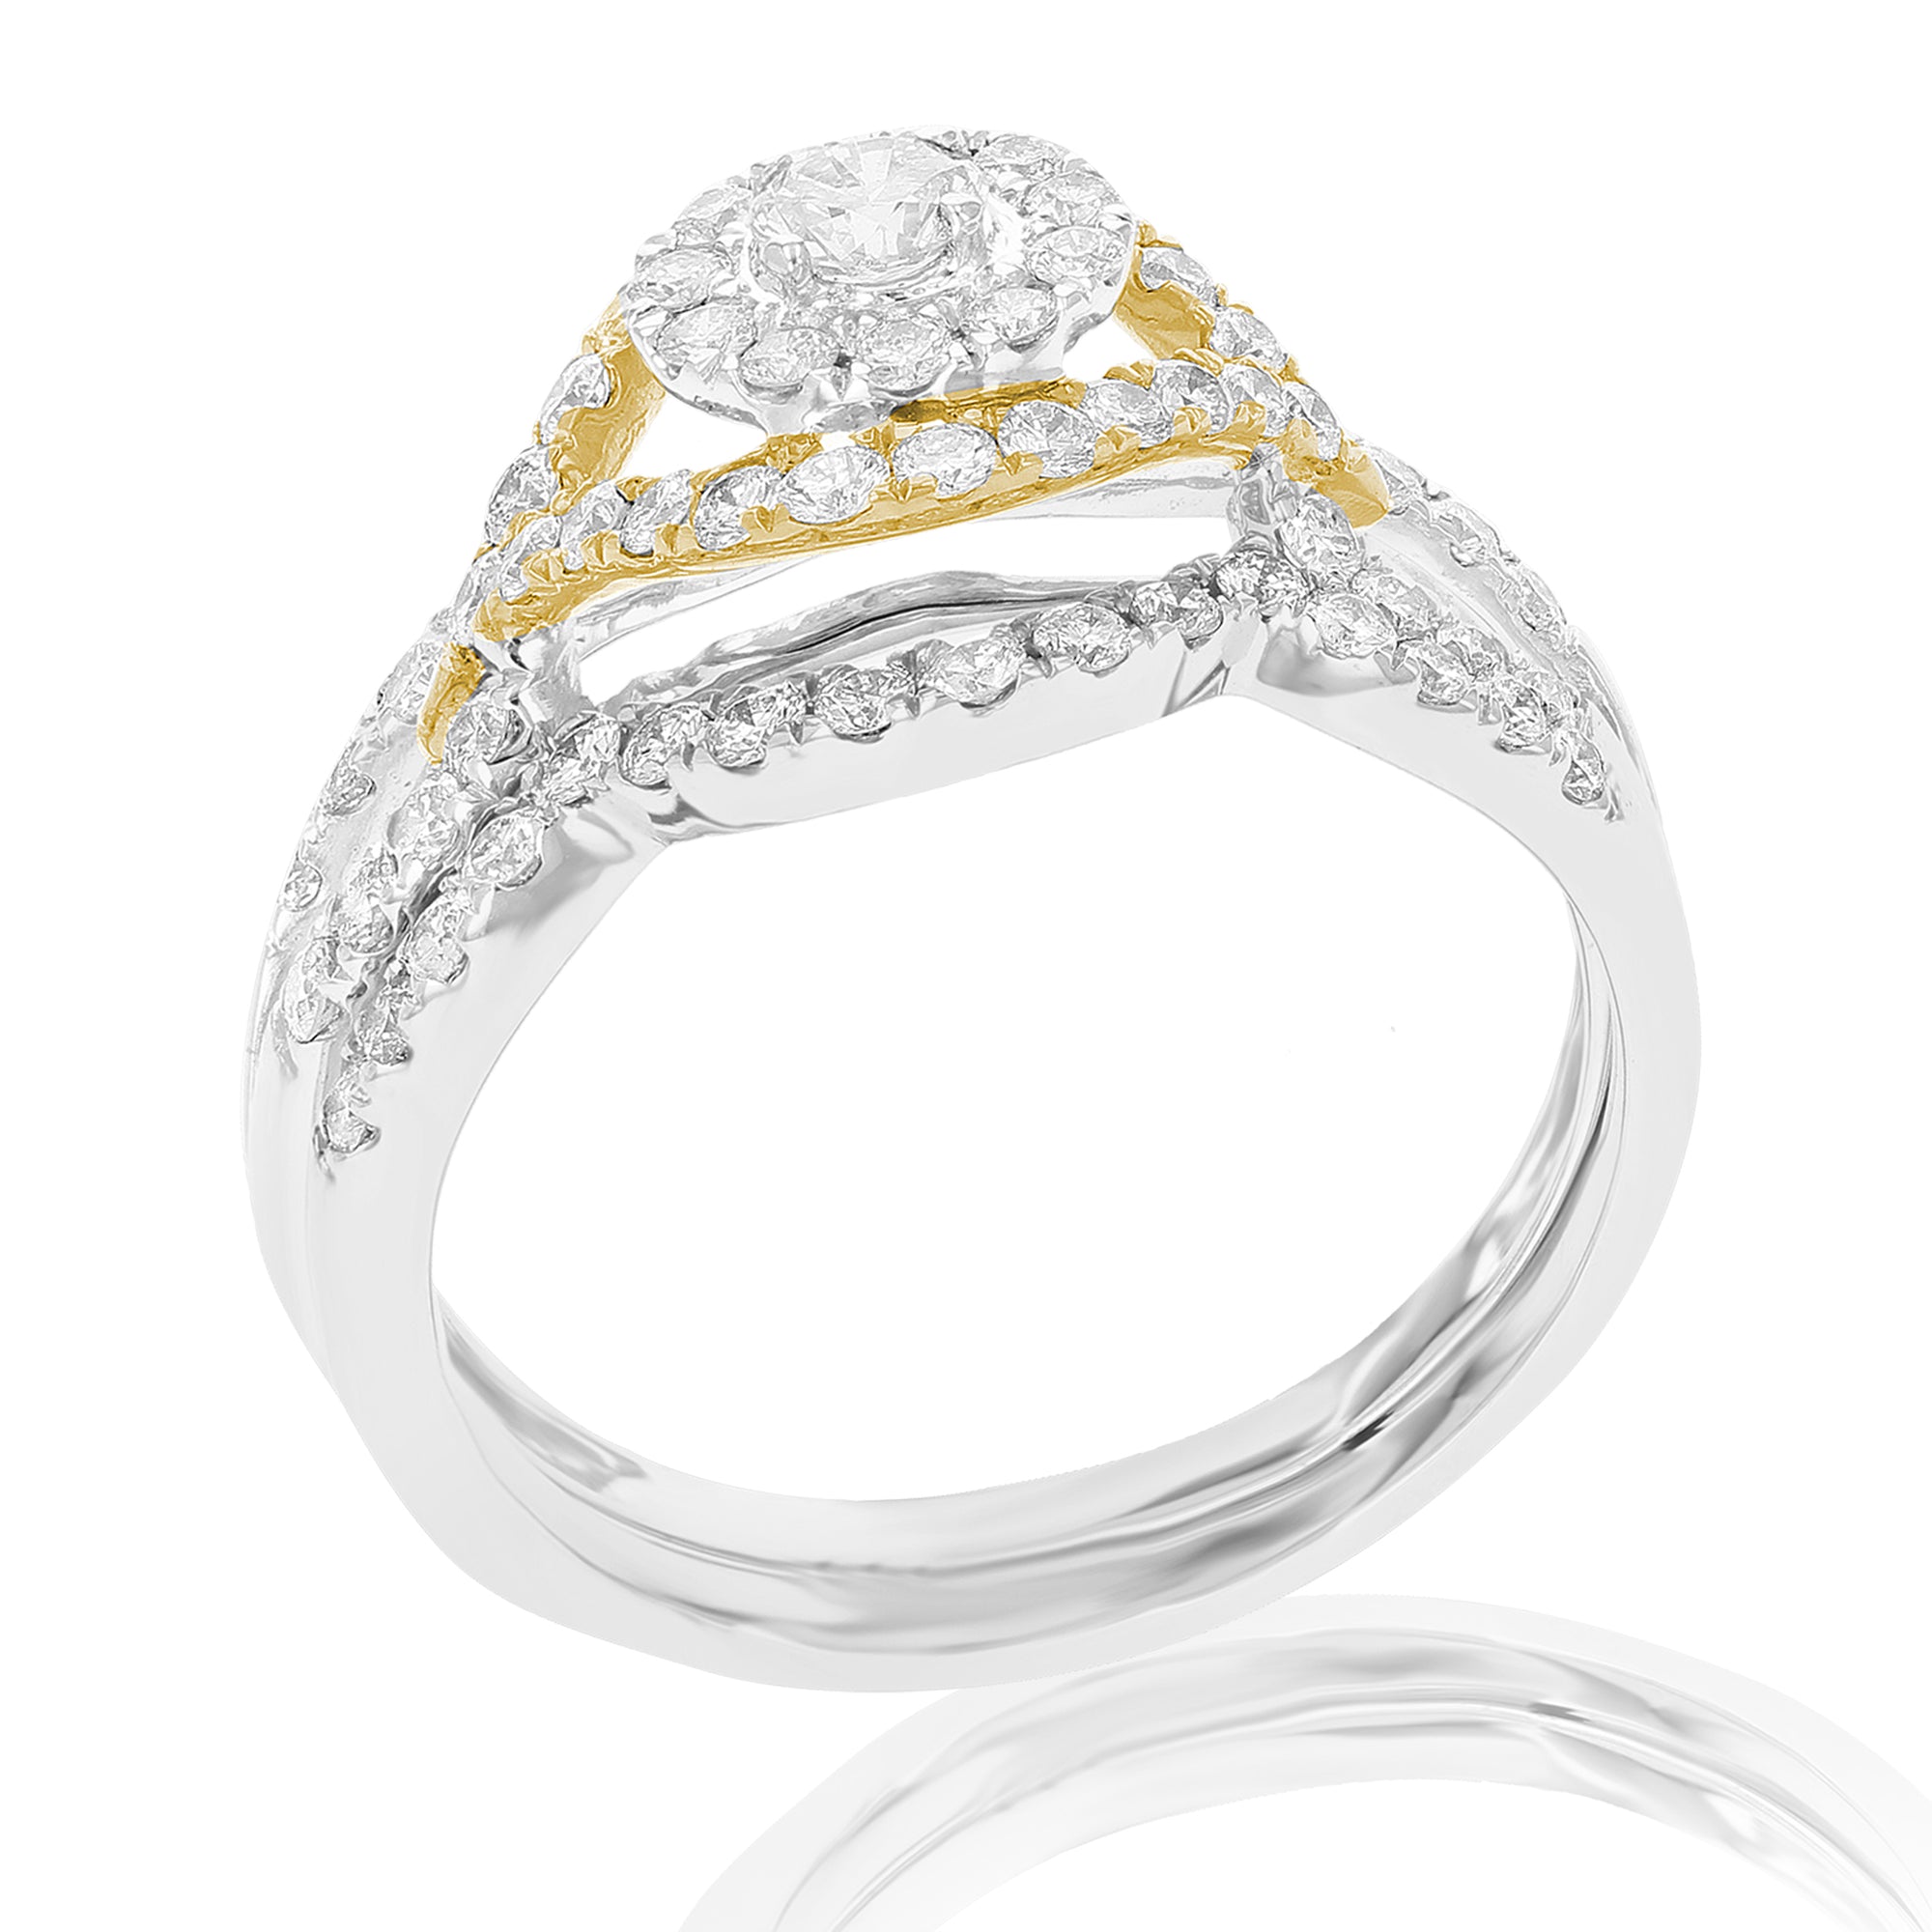 1 cttw Diamond Wedding Engagement Ring Set 14K White Yellow Gold Halo Bridal